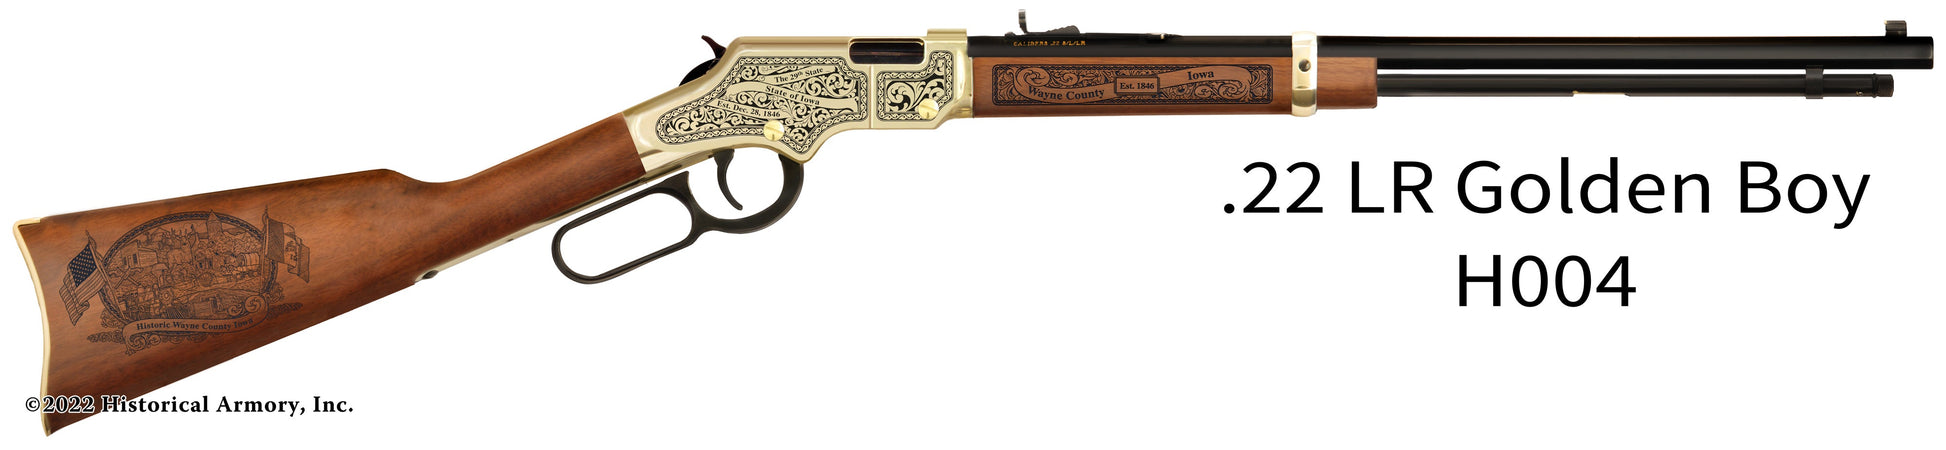 Wayne County Iowa Engraved Henry Golden Boy Rifle